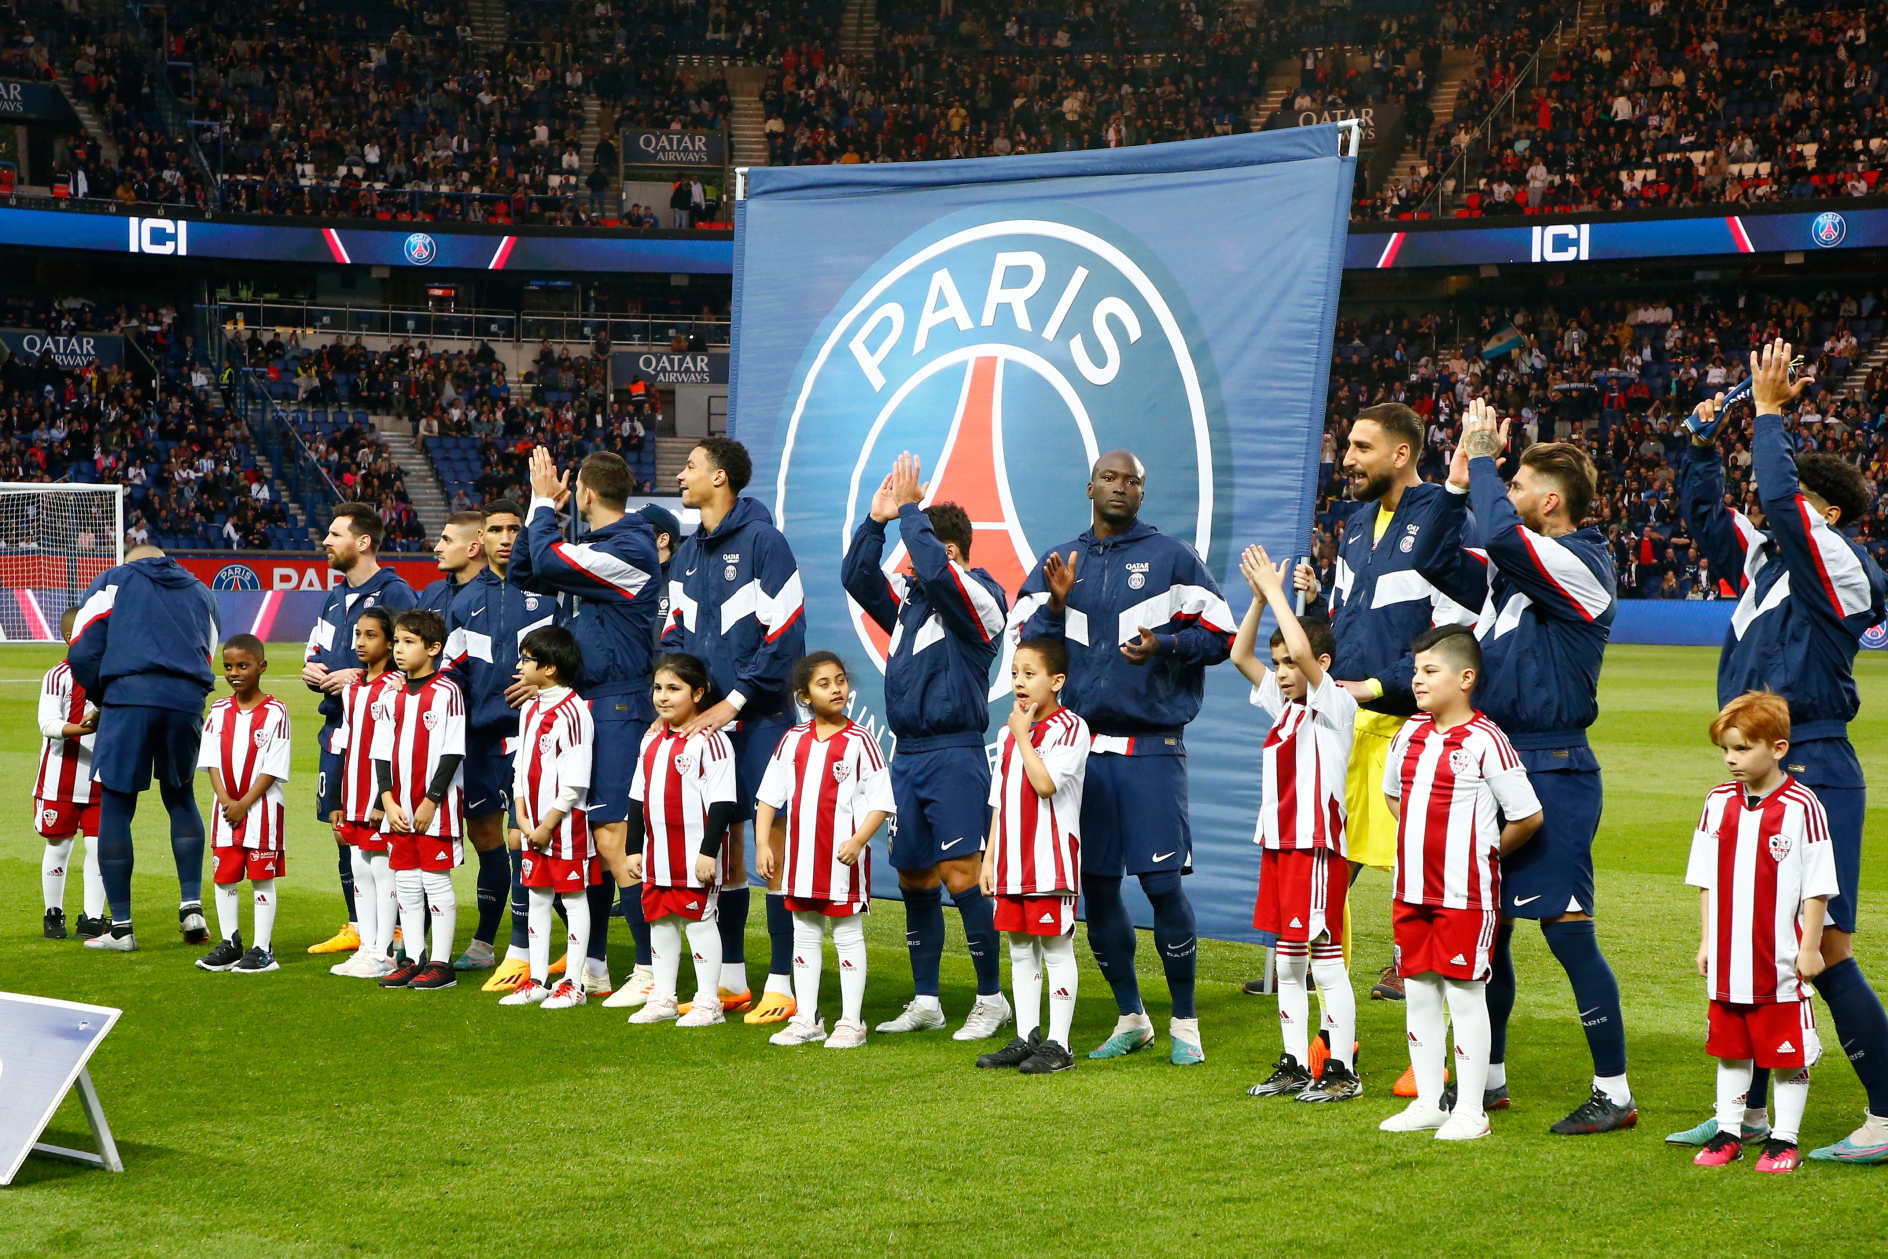 Paris Saint-Germain football players helping to make dreams come true at Parc des Princes. Click to enlarge.